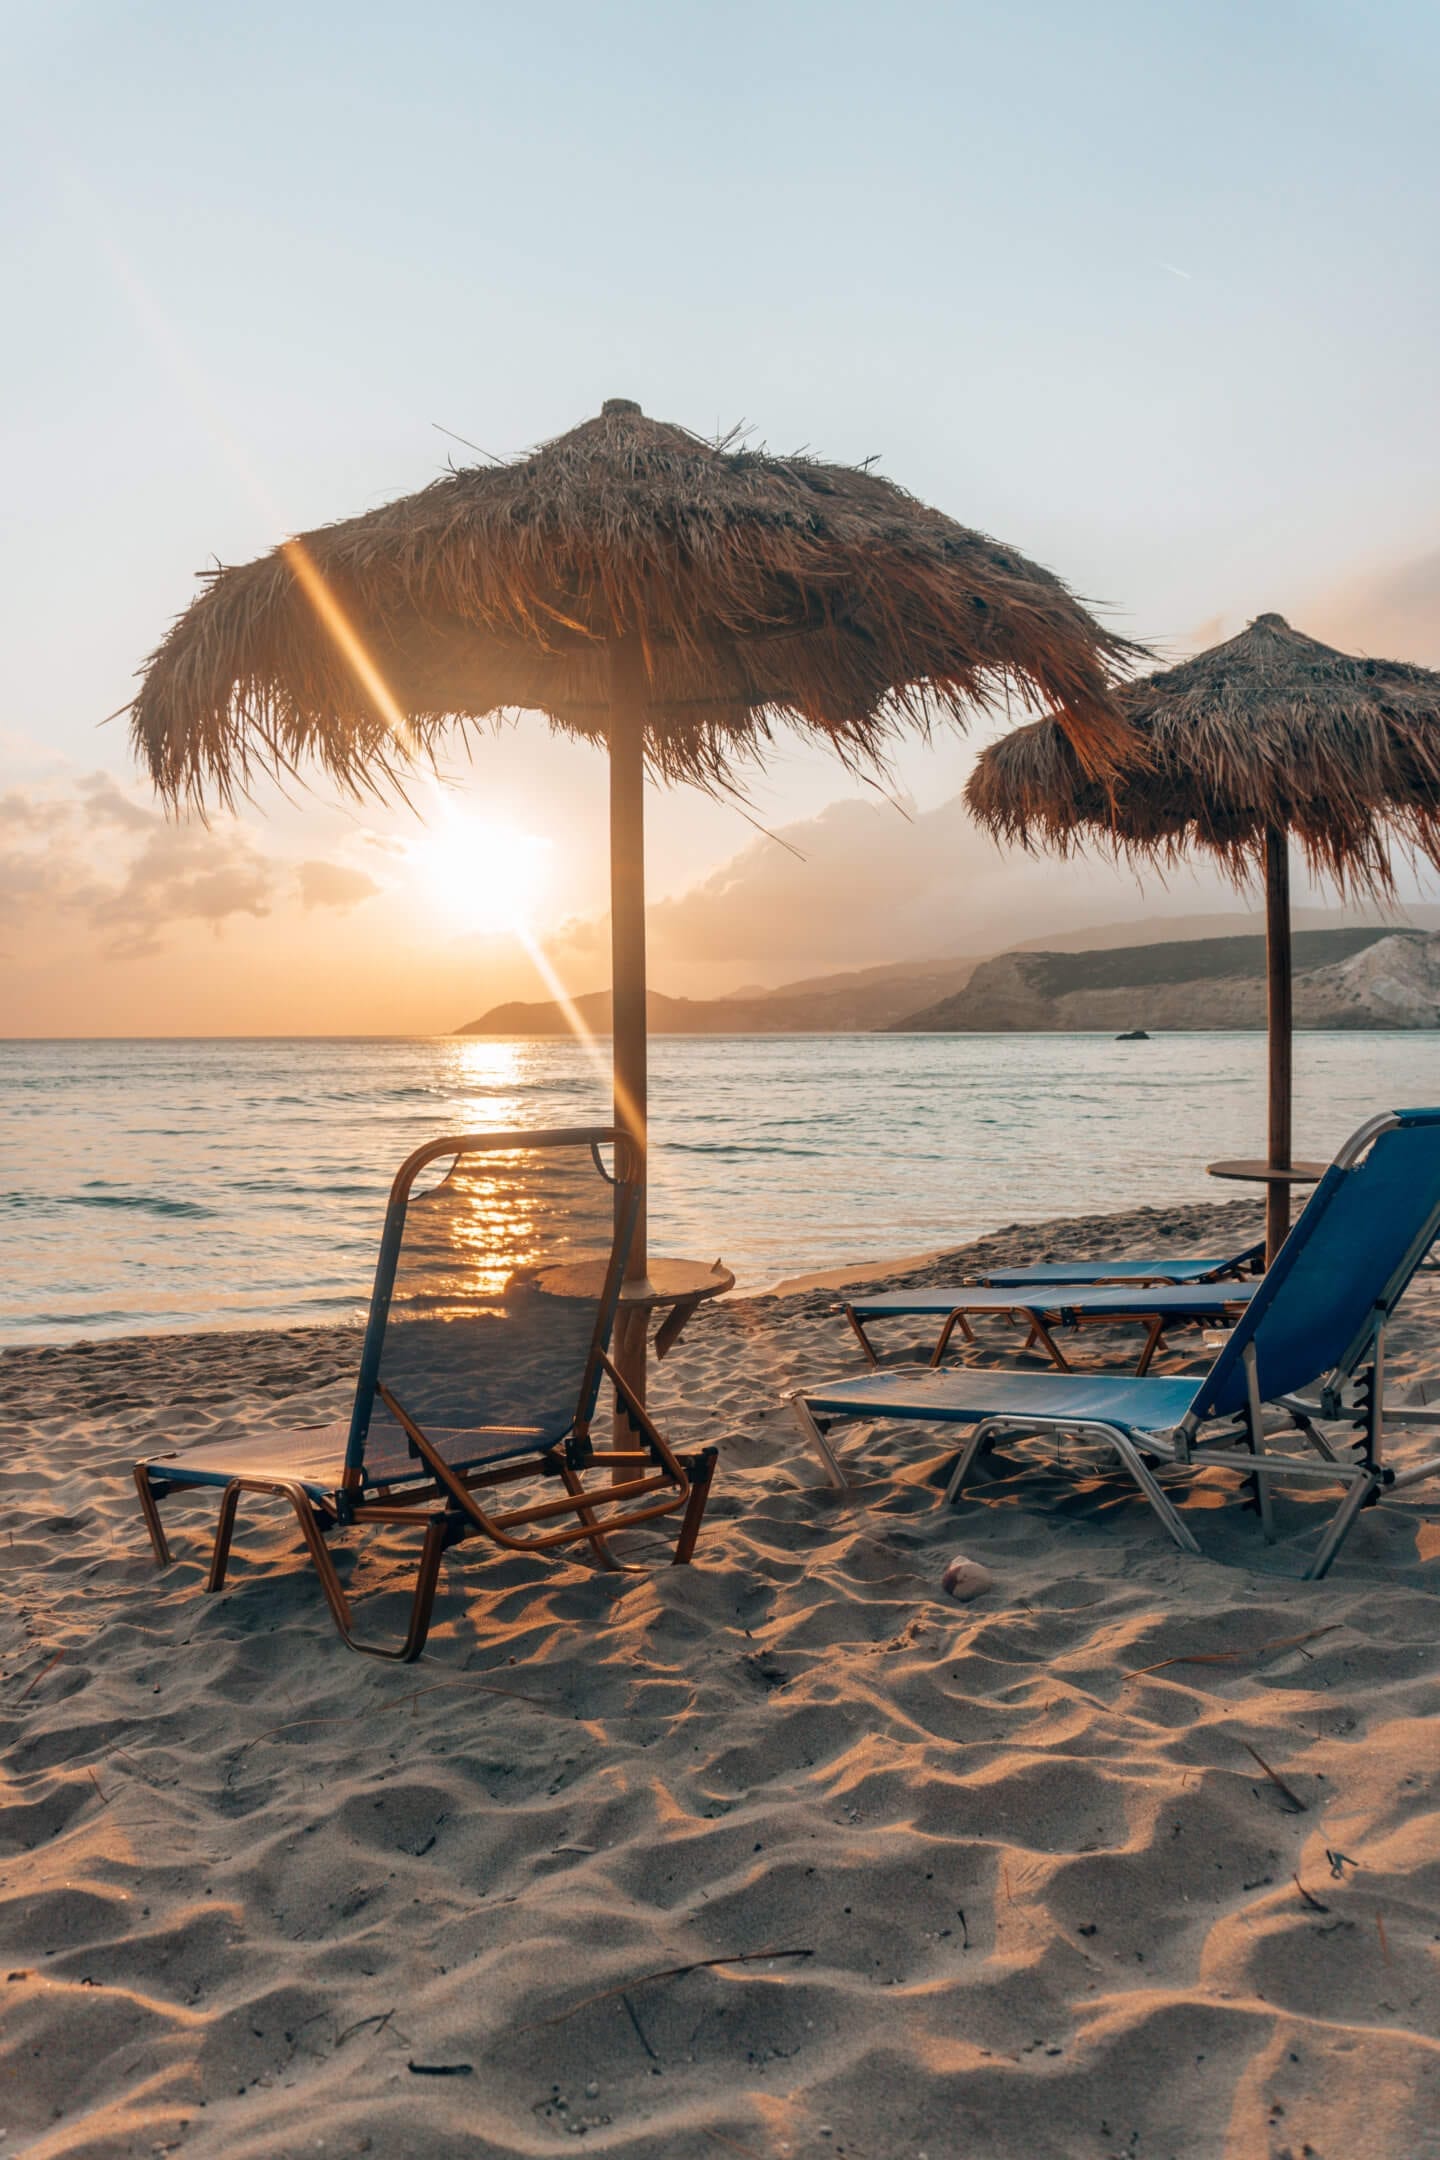 Sunsetting under beach umbrella at Firiplaka Beach - Milos travel guide